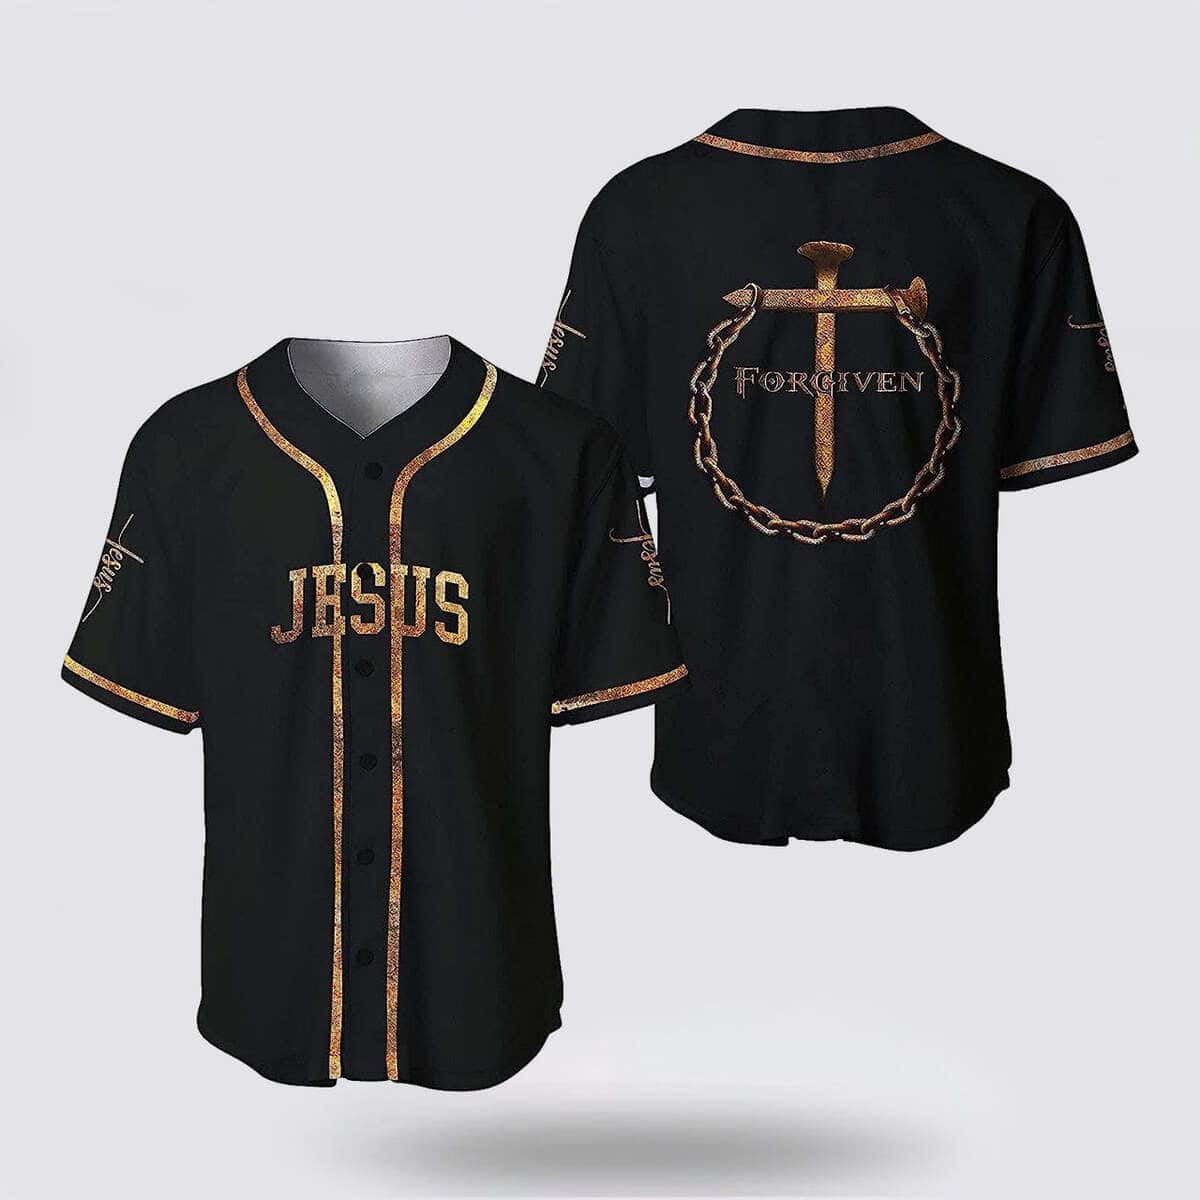 Christian Jesus Forgiven Jesus Faith Religious Baseball Jersey